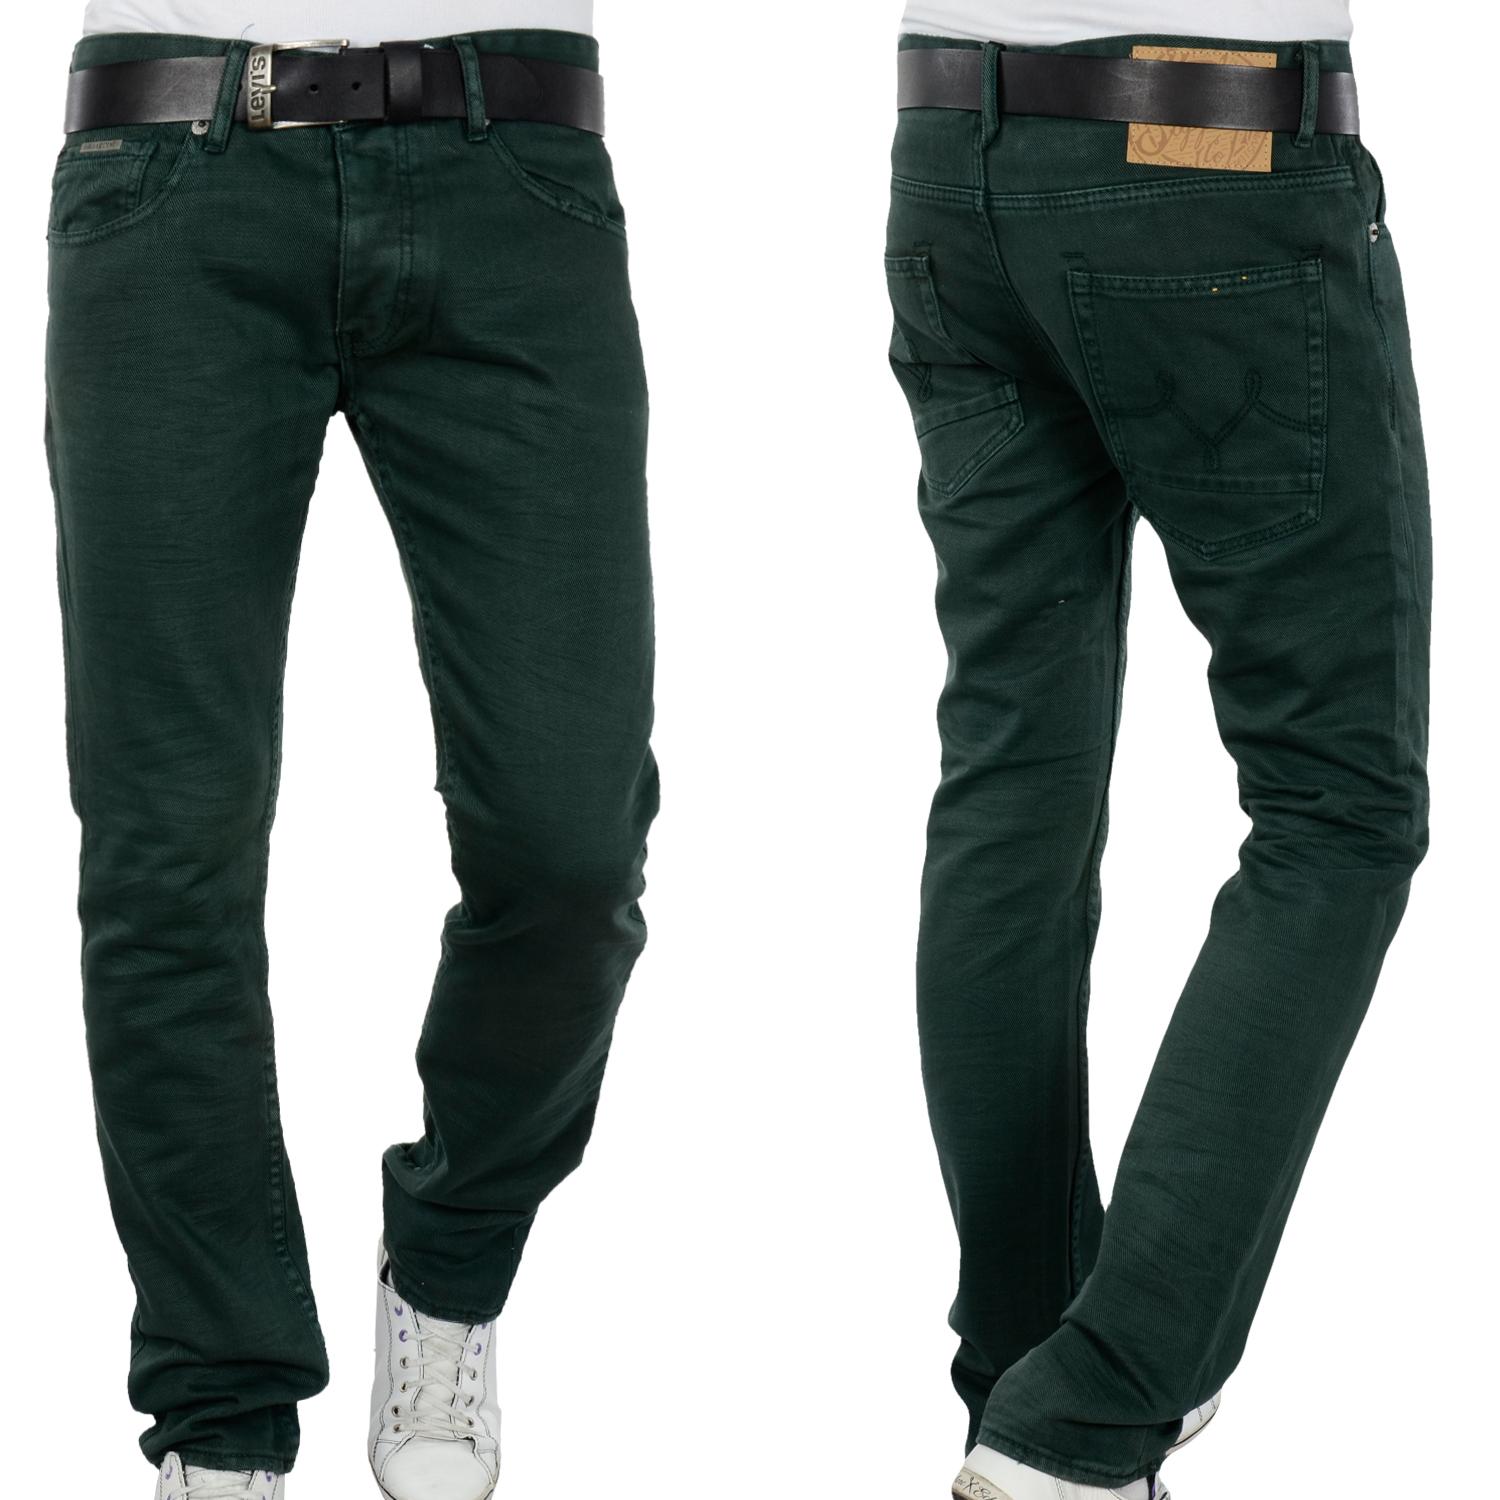 Foto Patria Mardini Hombres Regular Fit Jeans De Color Verde Oscuro